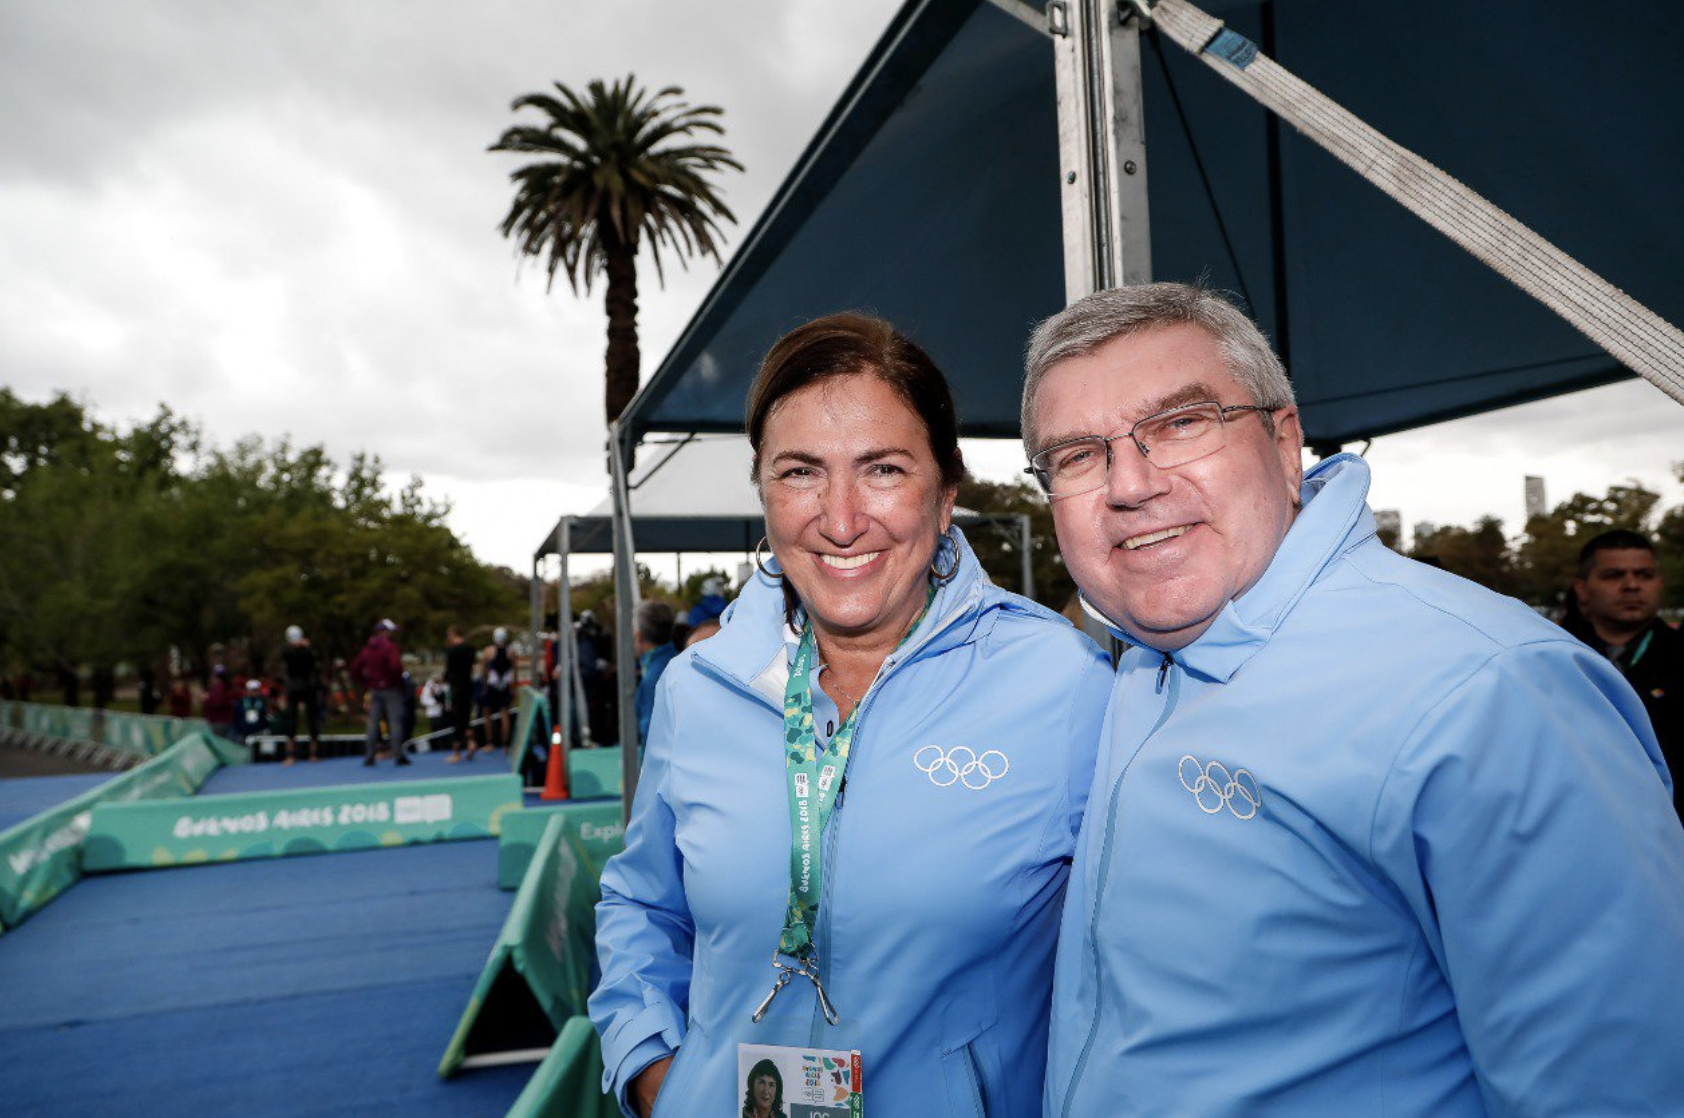 World Triathlon President Marisol Casado has been an IOC member for a decade ©World Triathlon